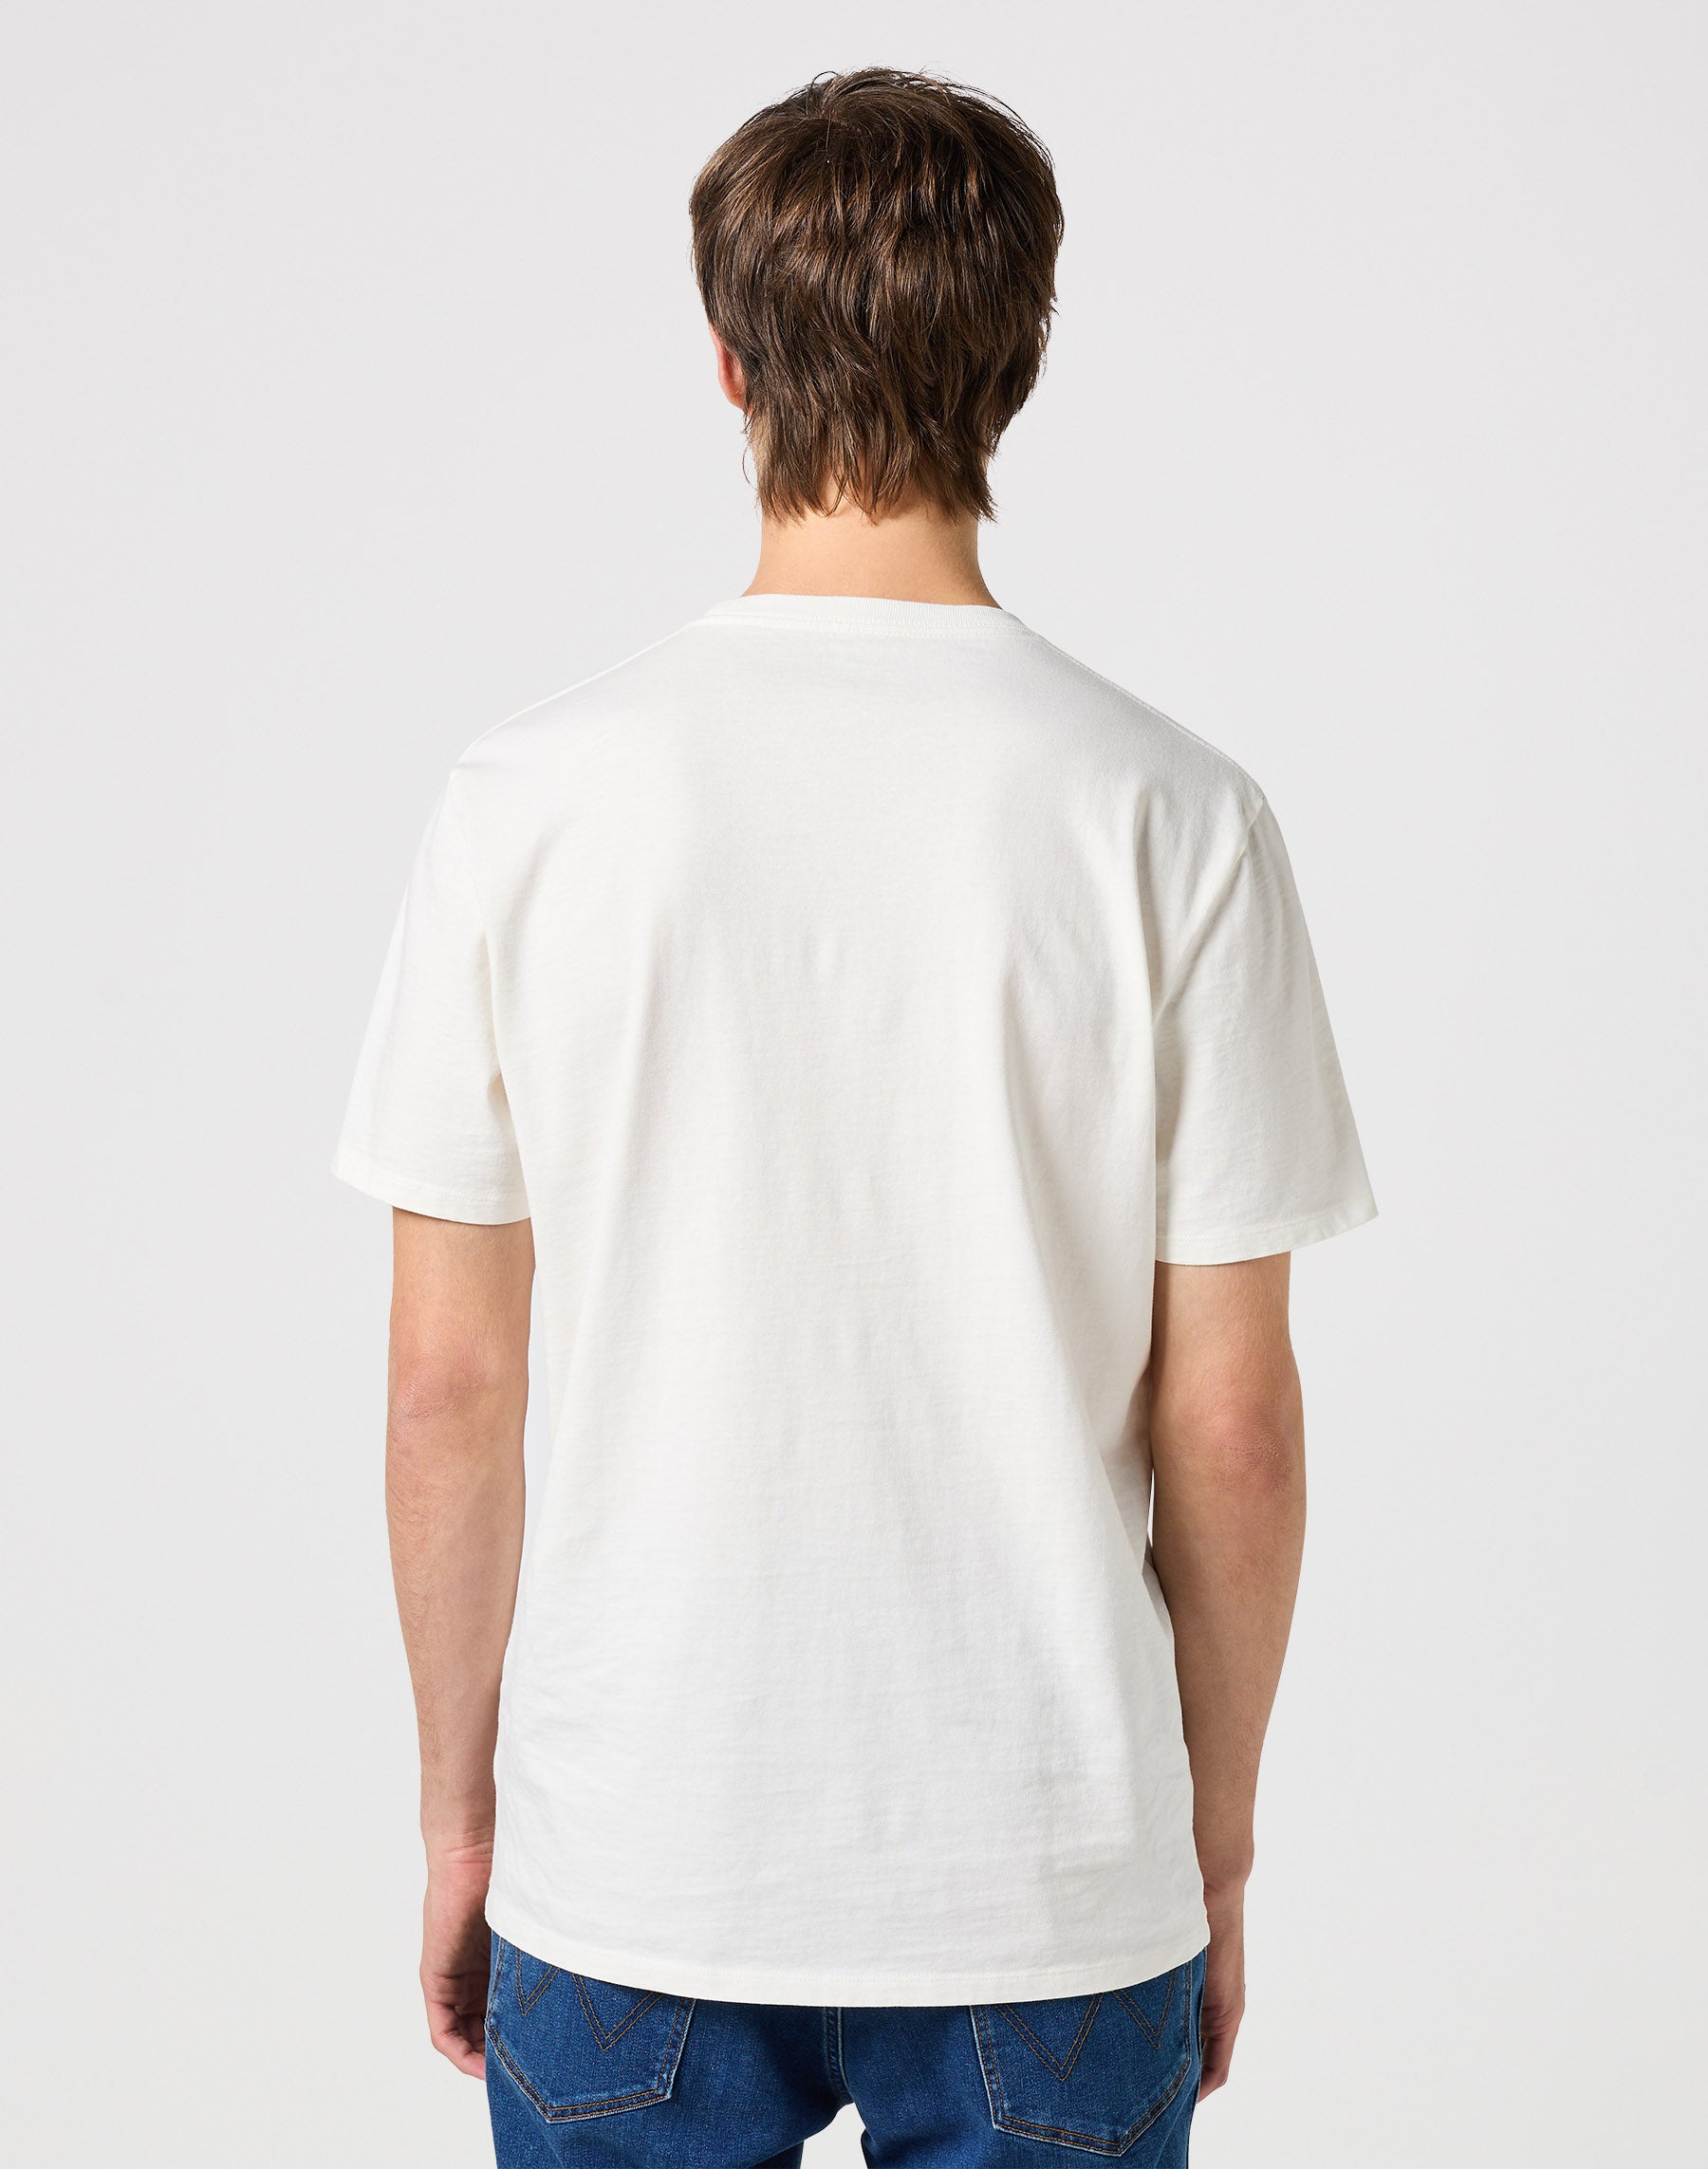 Americana Tee in White T-Shirts Wrangler   